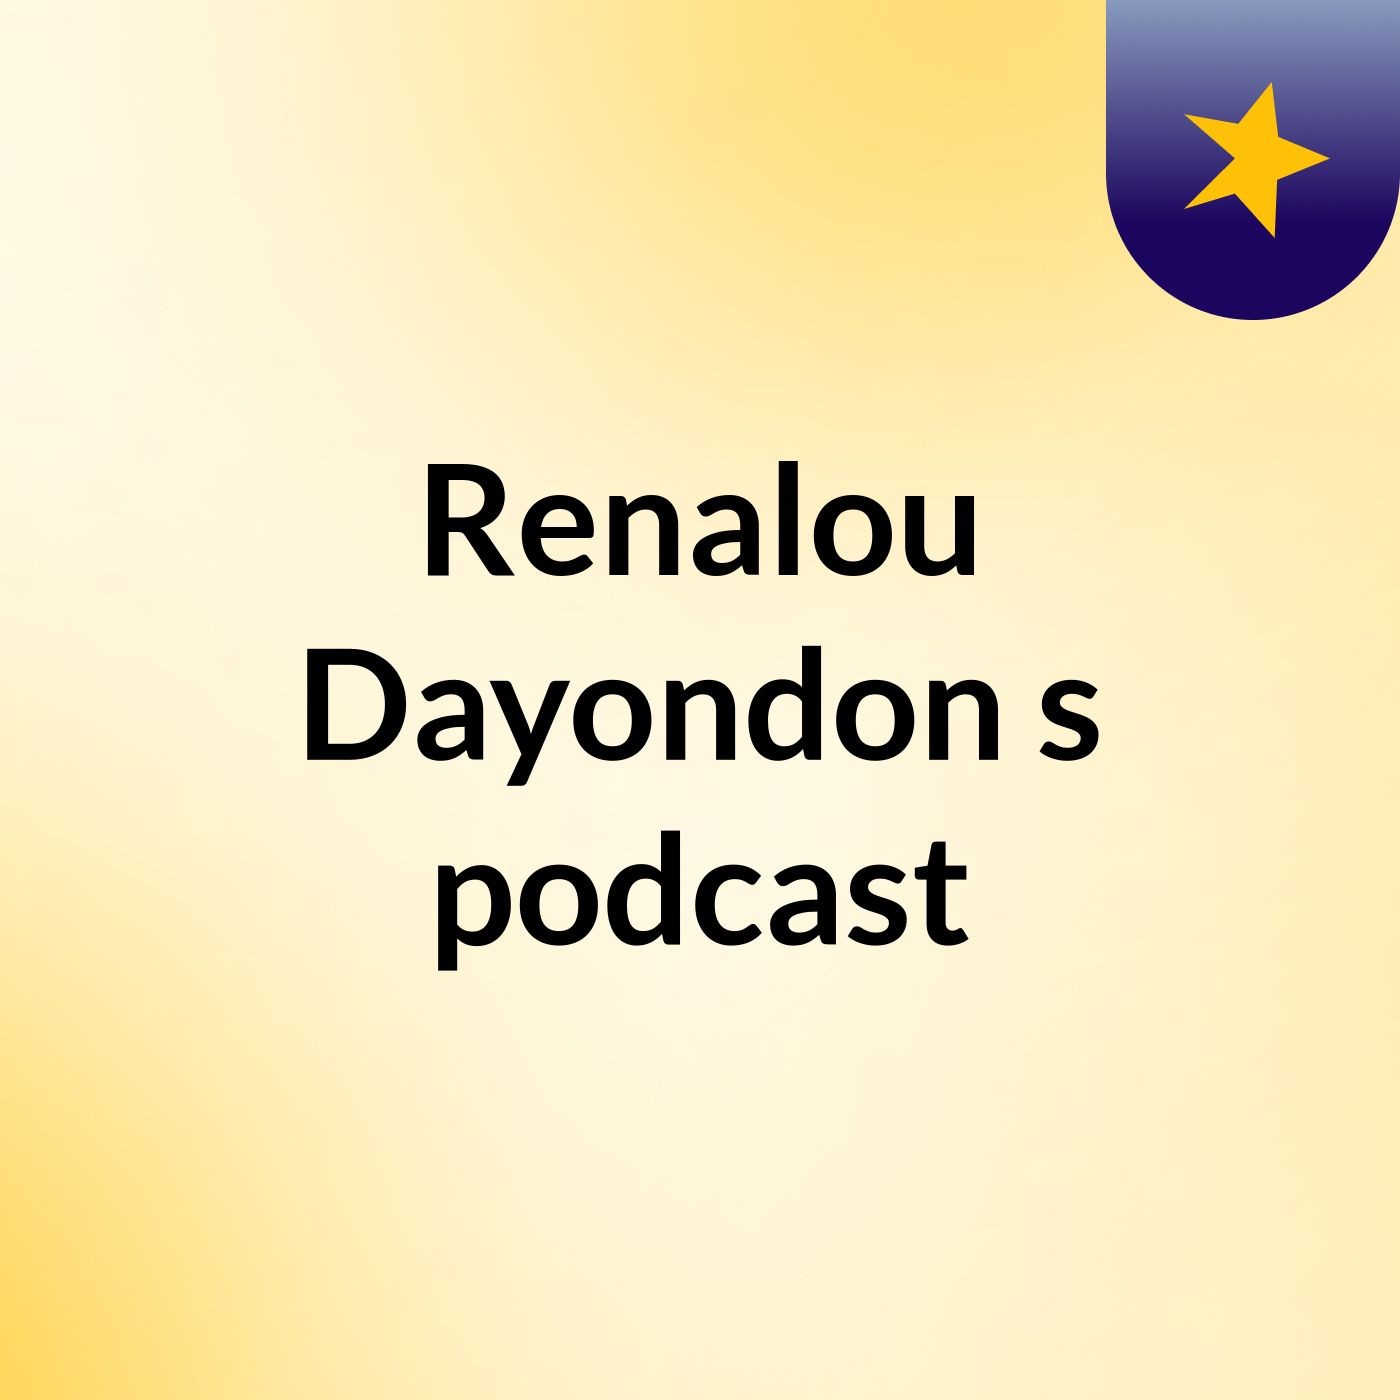 Renalou Dayondon's podcast